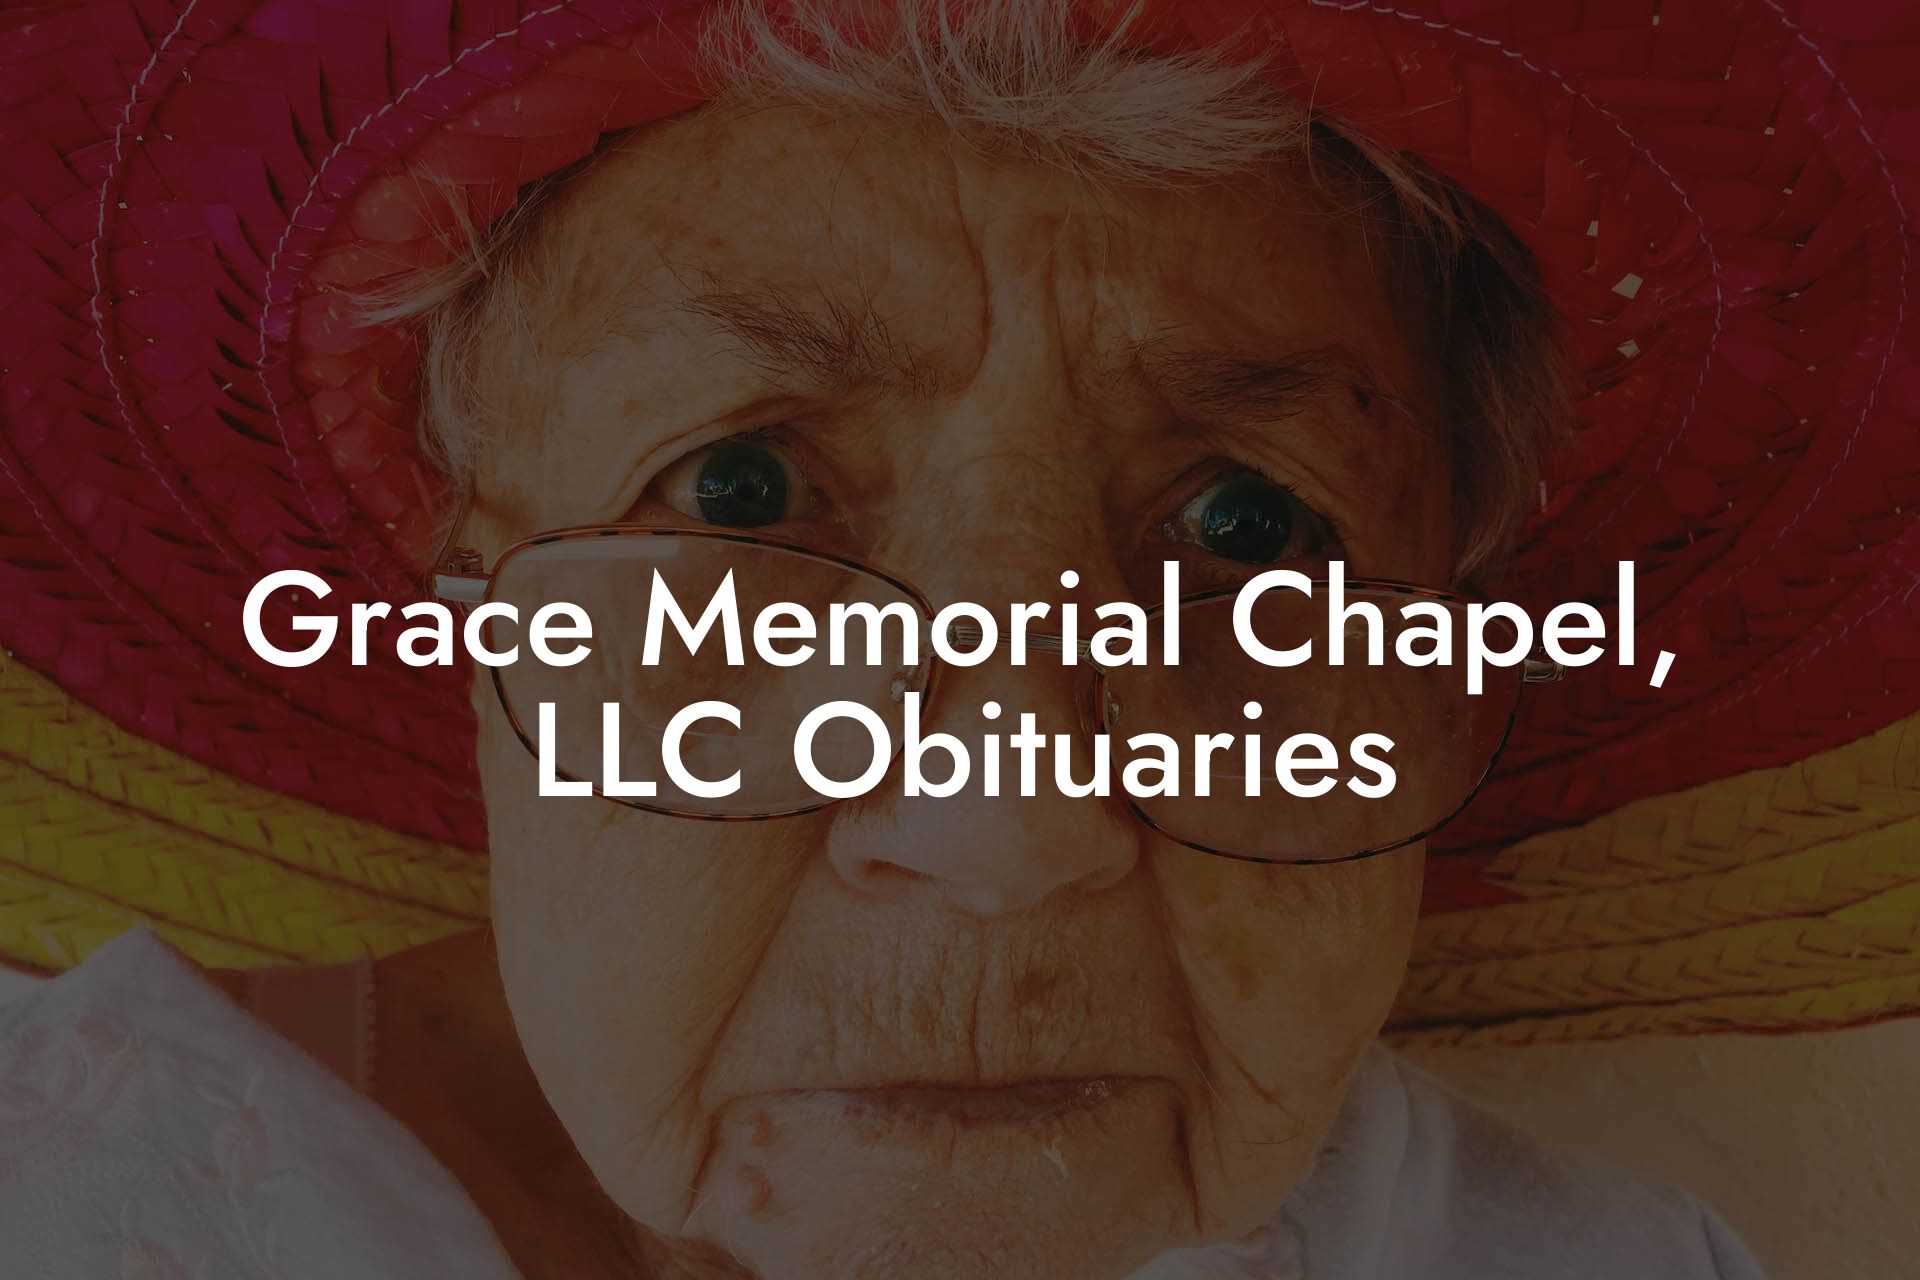 Grace Memorial Chapel, LLC Obituaries